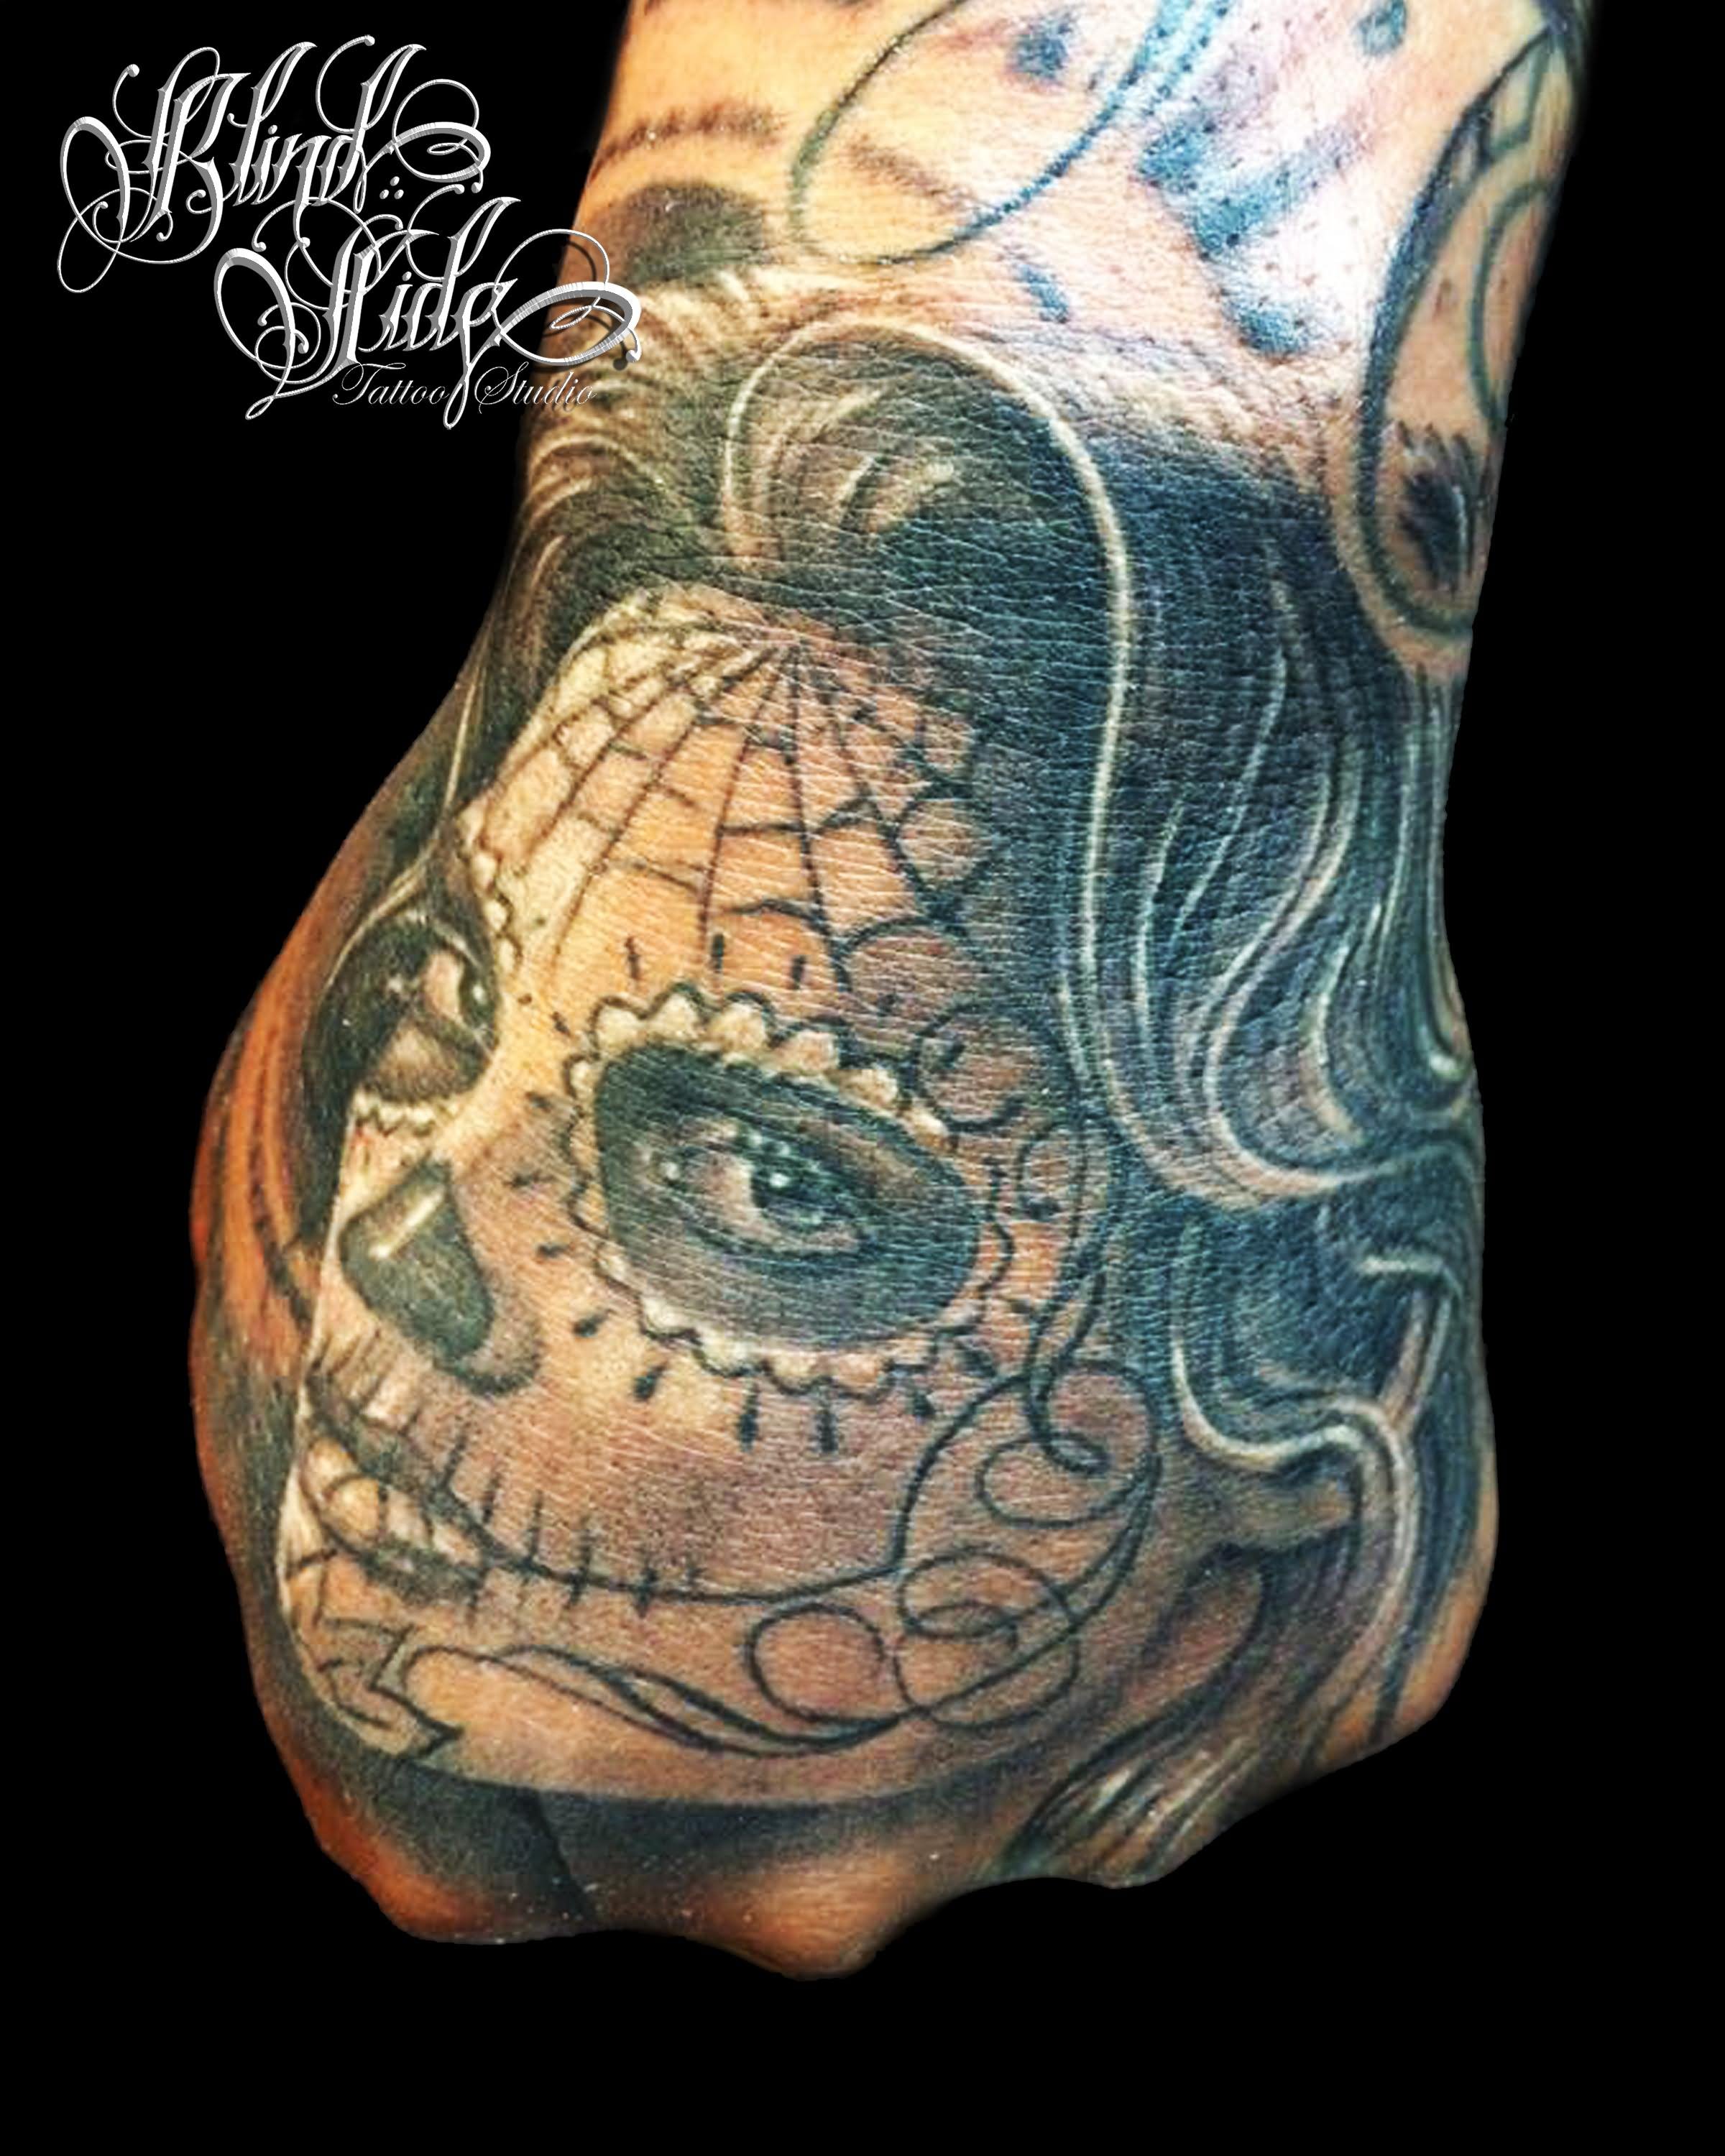 Black And Grey Dia De Los Muertos Girl Face Tattoo On Hand